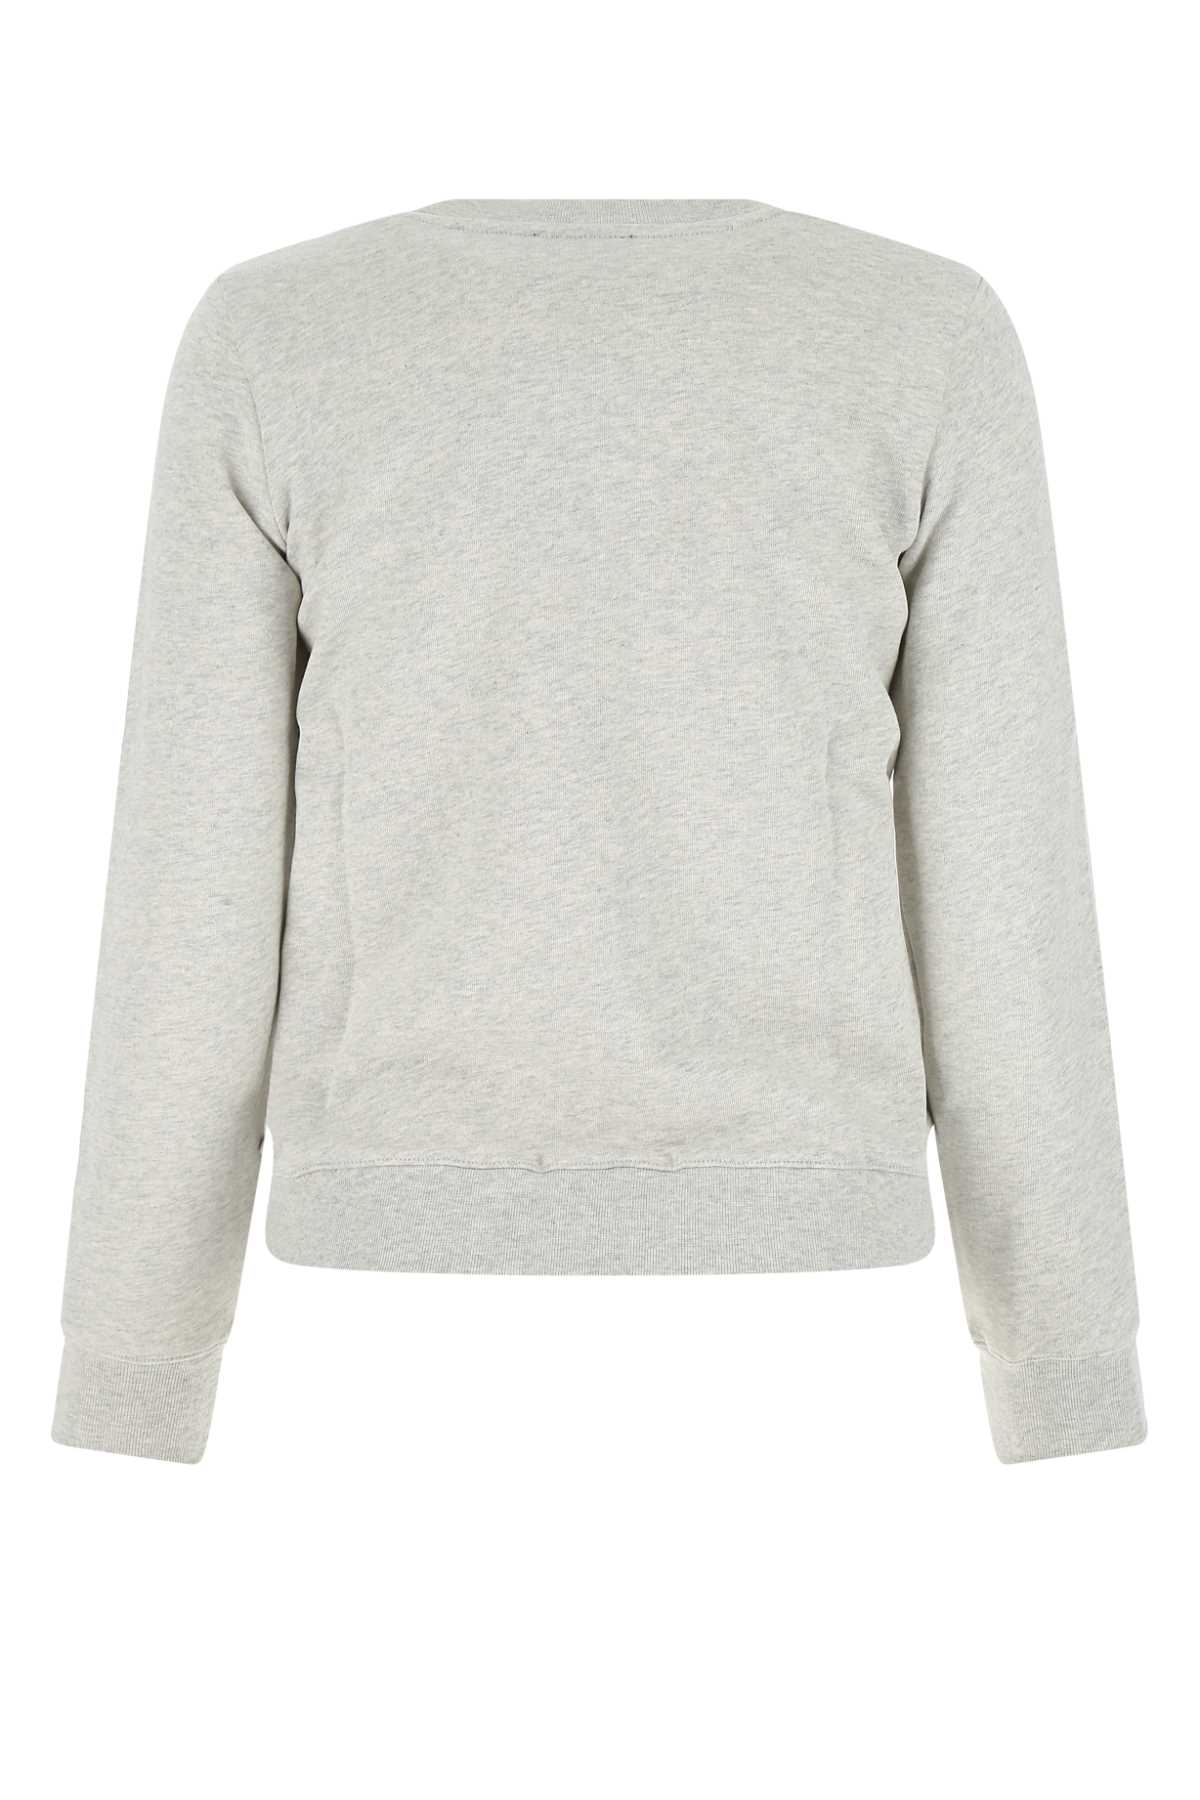 Apc Melange Grey Cotton Sweatshirt In Paa